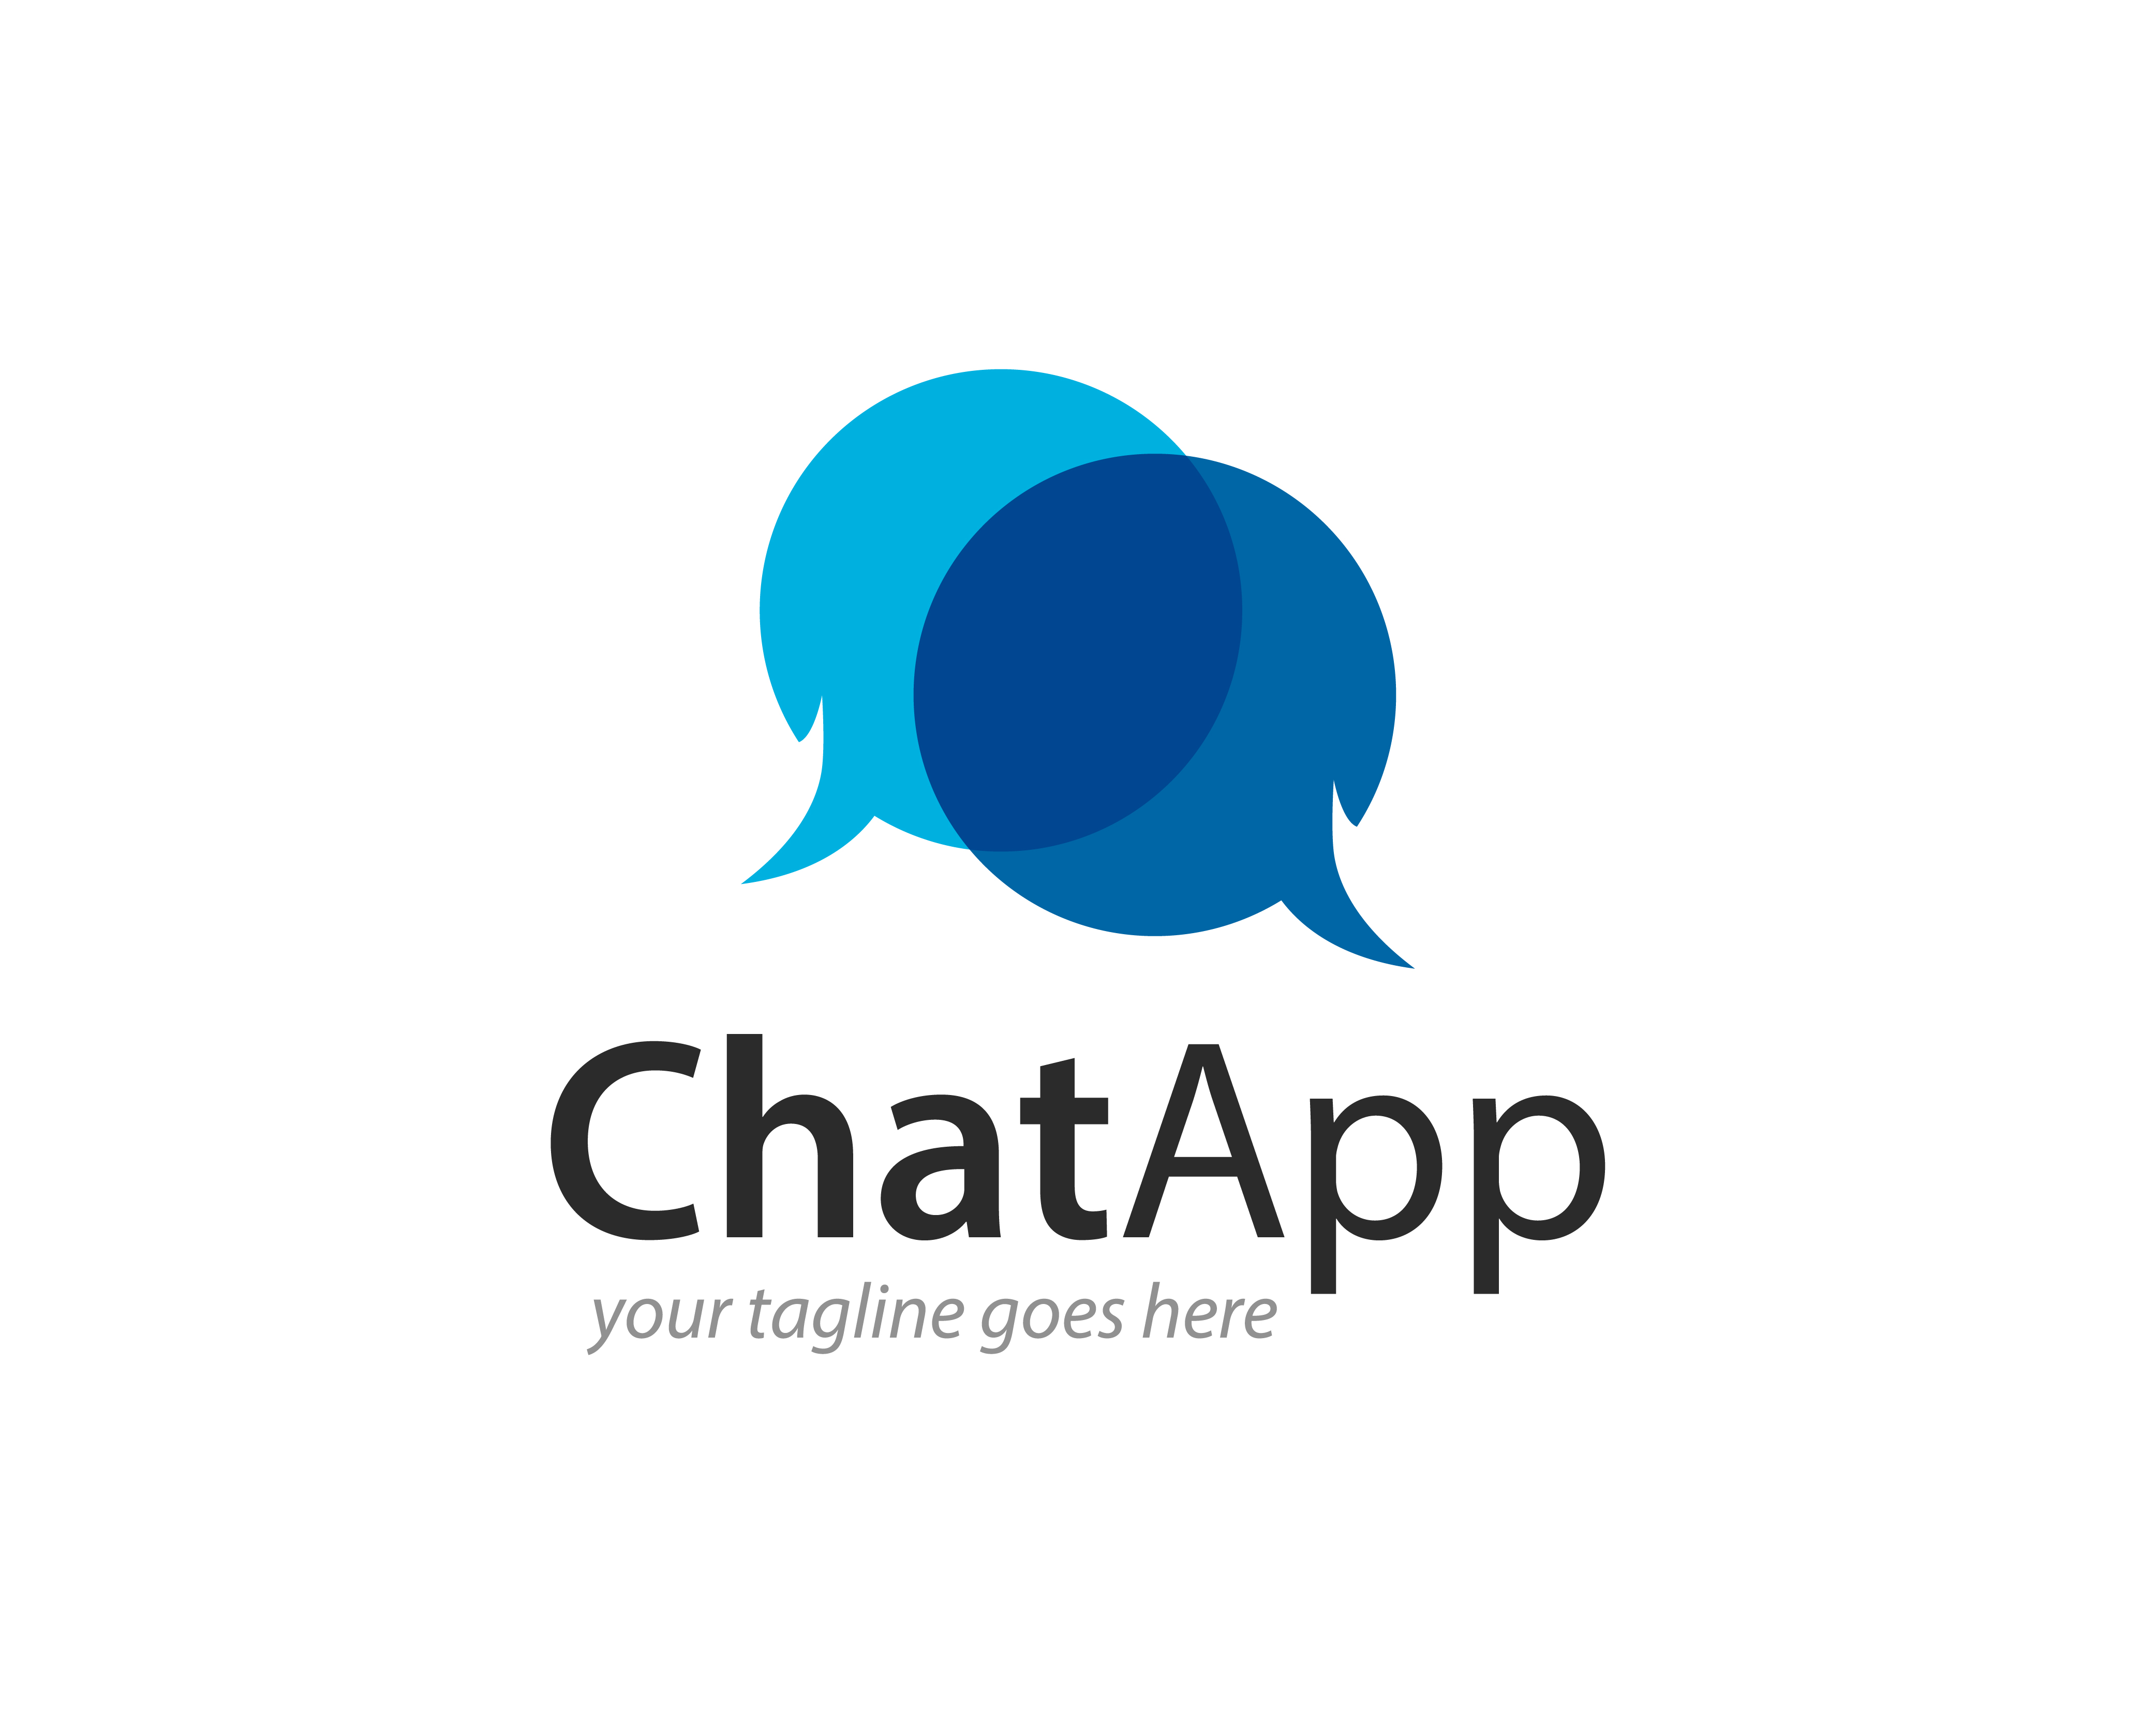 Details 106+ chat app logo png best